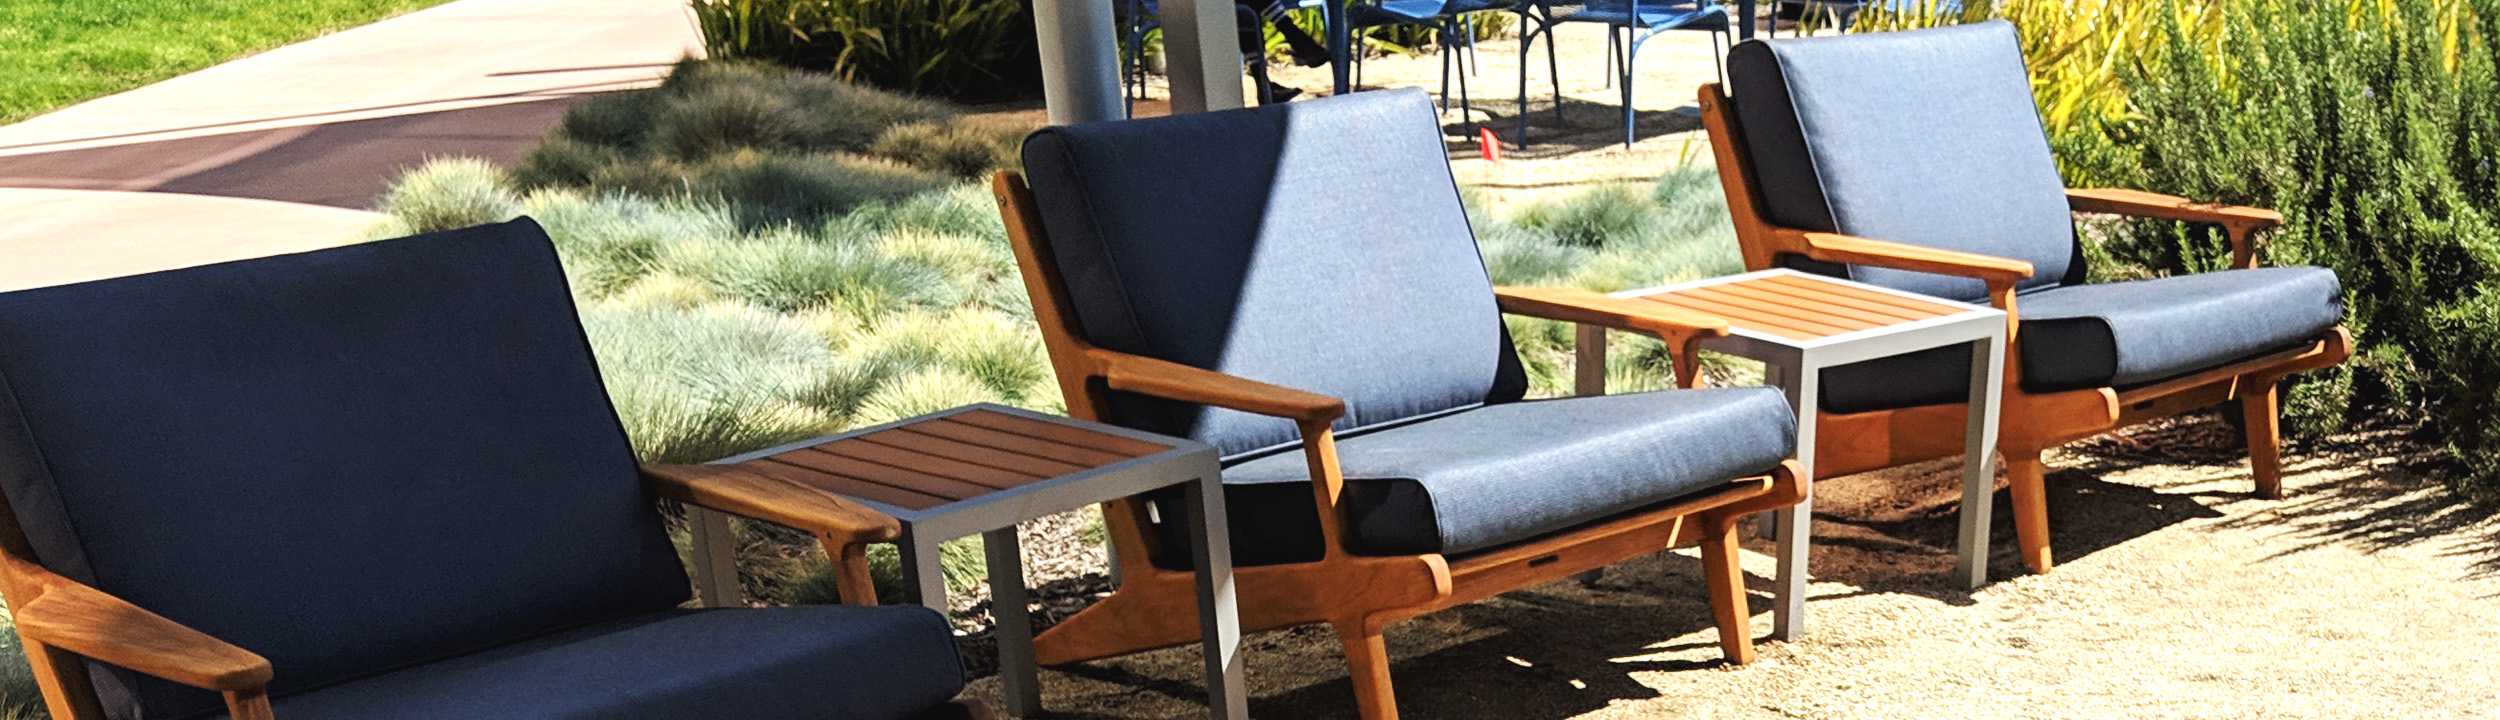 Orange County chairs and side table teak restoration | OC Teak